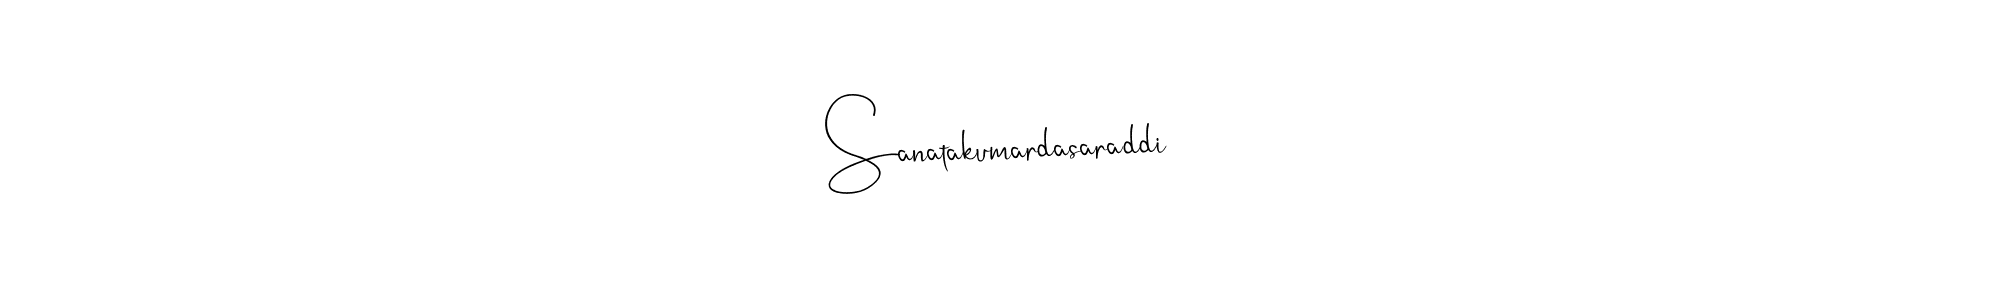 Make a beautiful signature design for name Sanatakumardasaraddi. Use this online signature maker to create a handwritten signature for free. Sanatakumardasaraddi signature style 4 images and pictures png